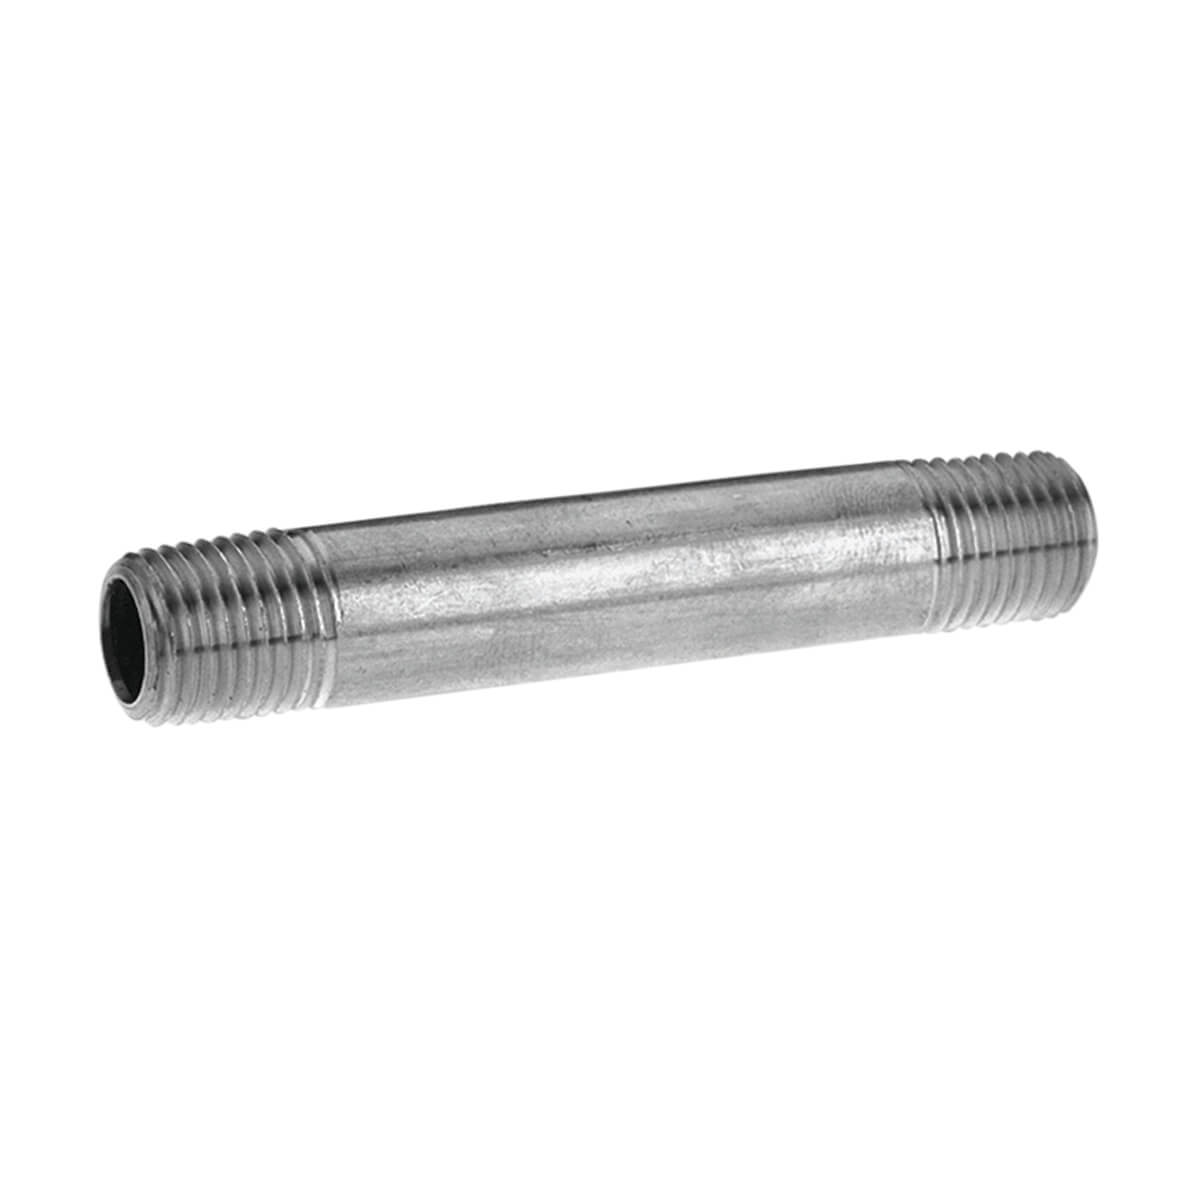 Pipe Nipple Glavanized Steel - 3/8-in x 2-in